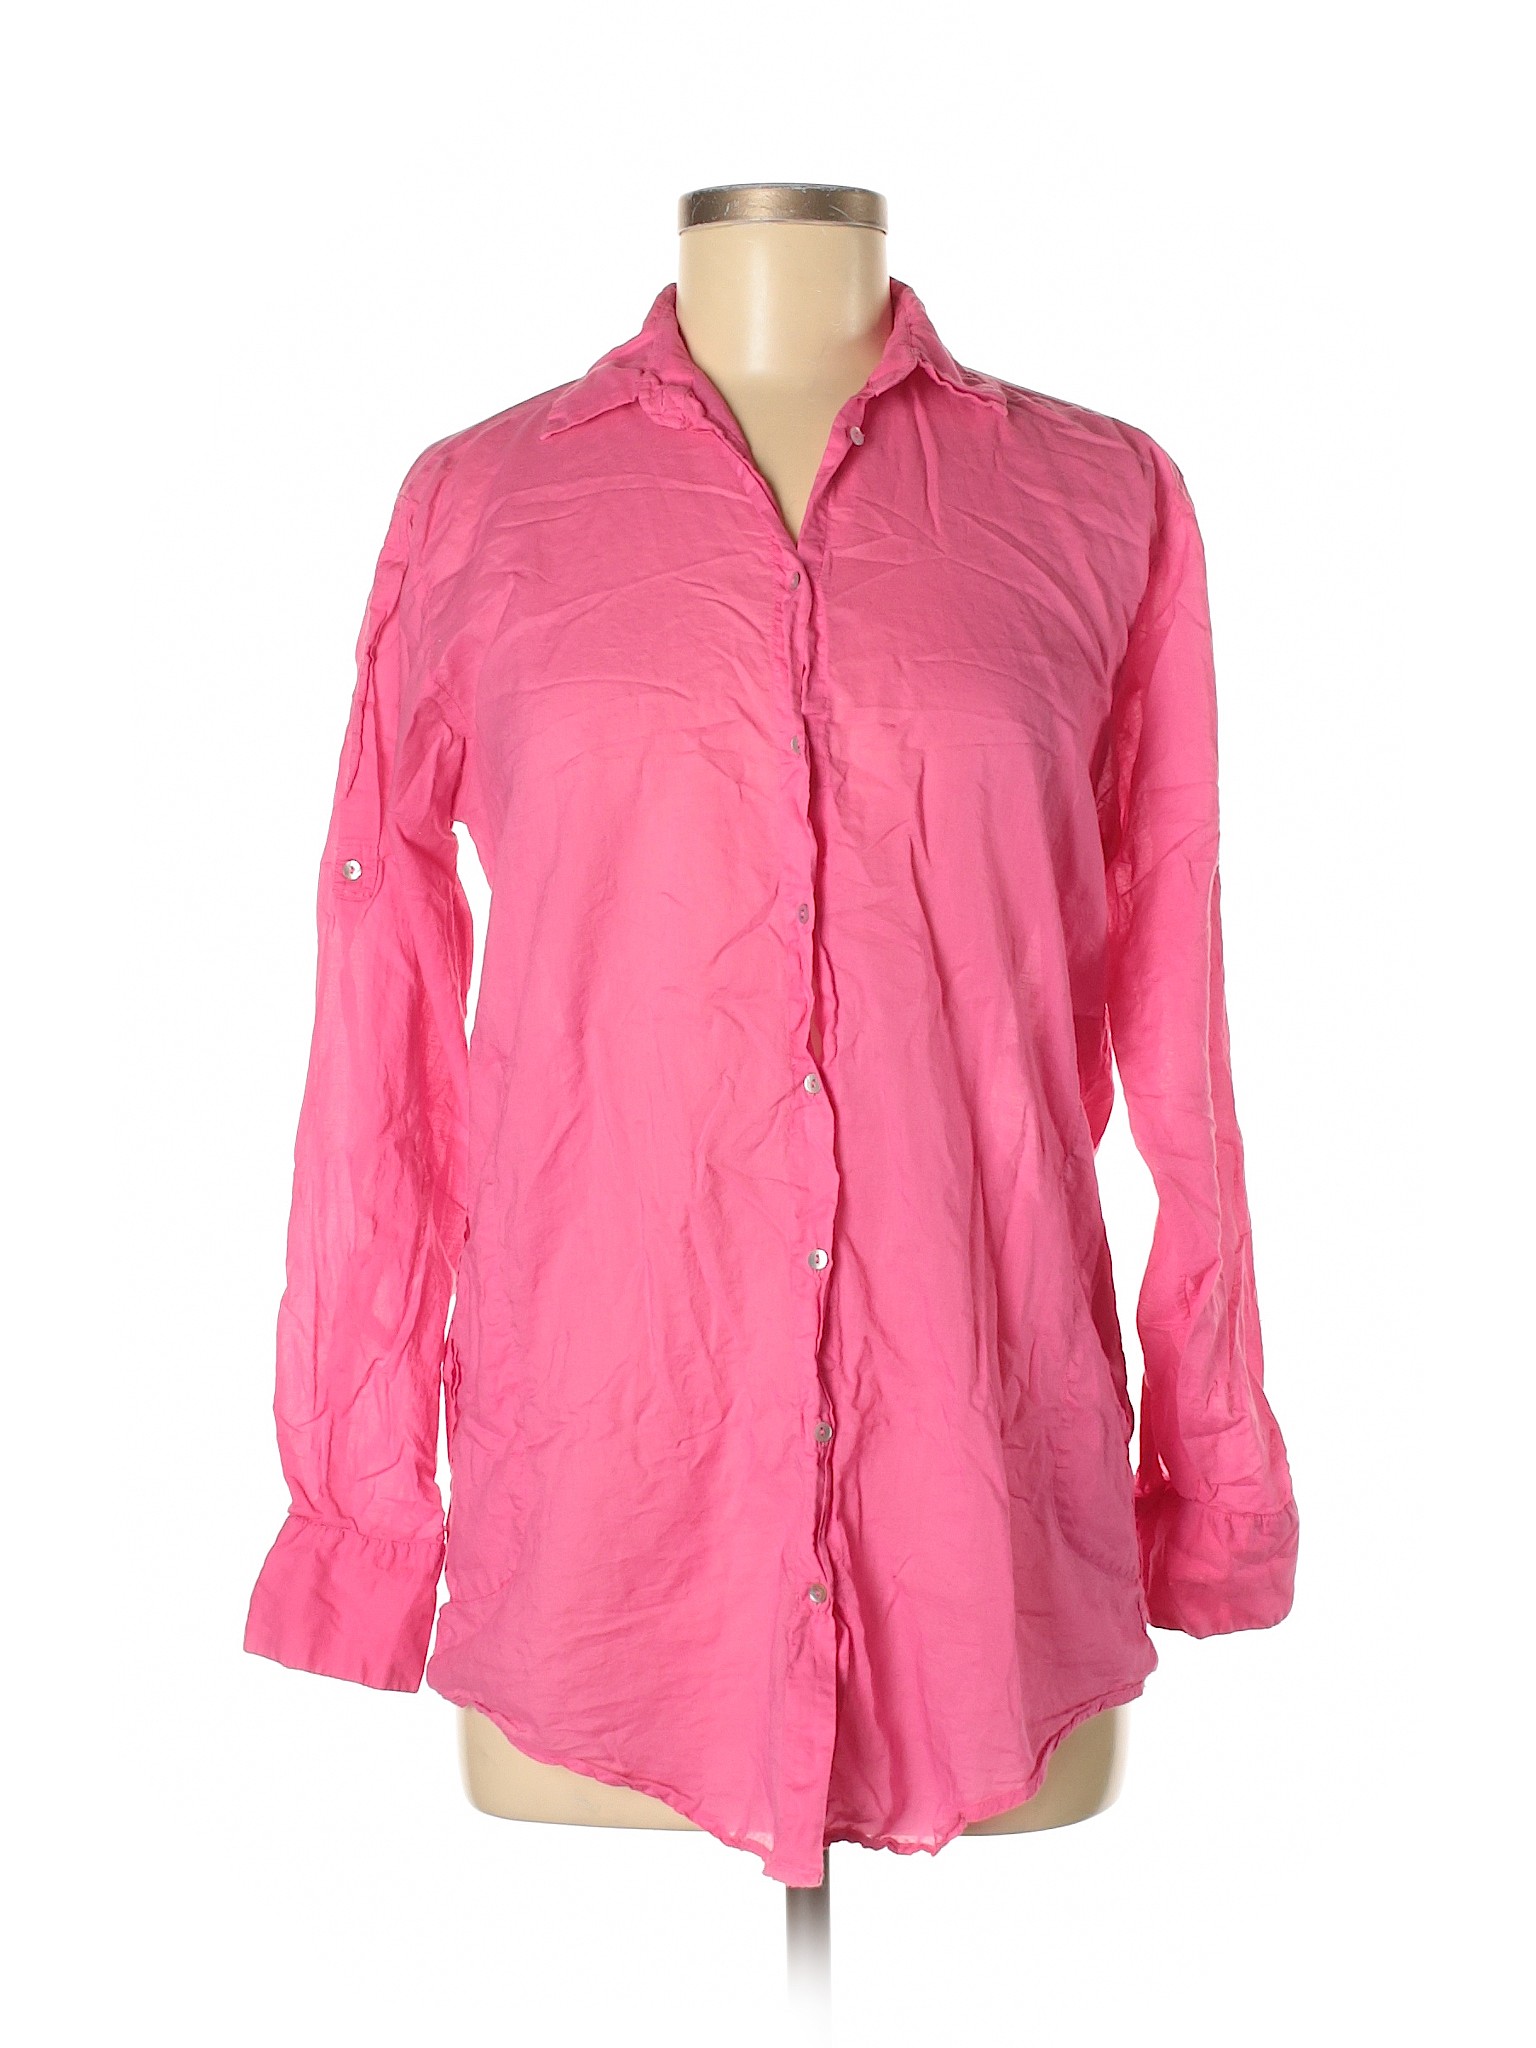 Zara Basic Women Pink Long Sleeve Button-Down Shirt M | eBay